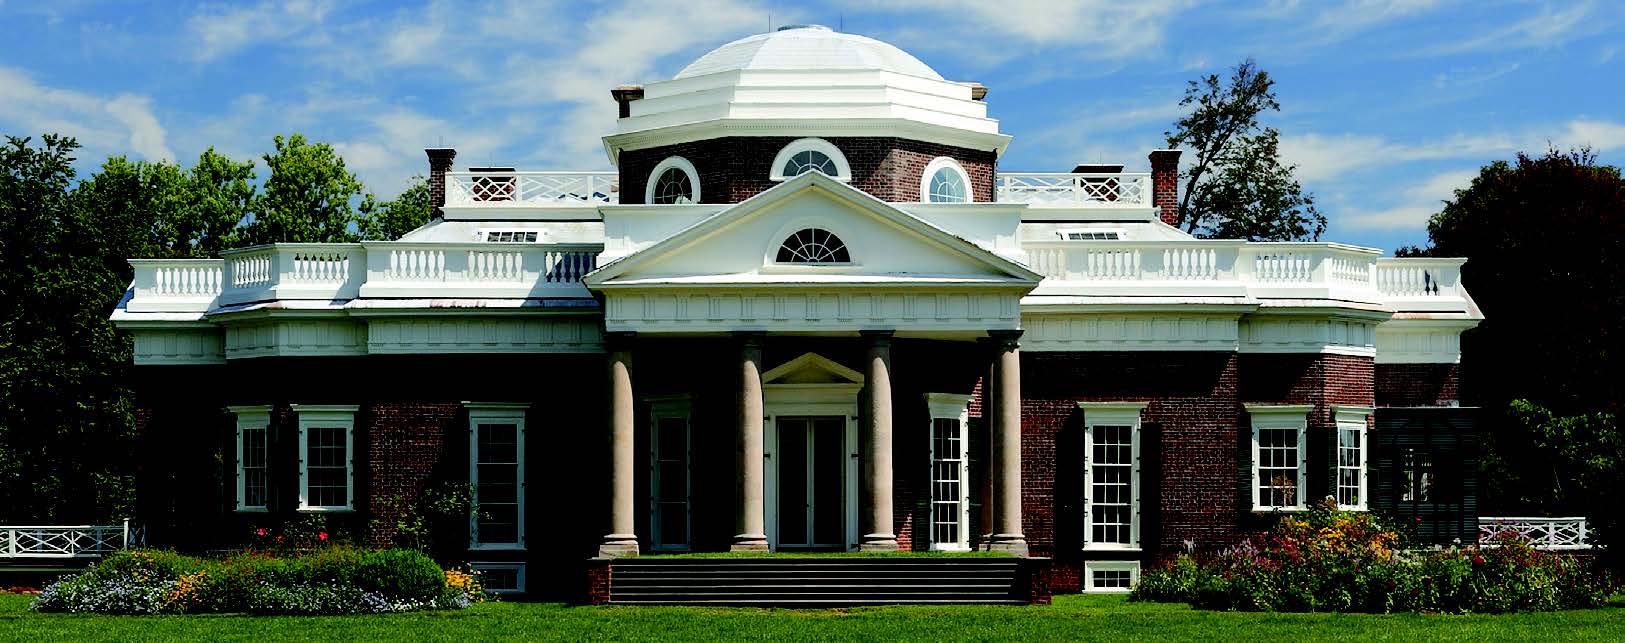 Thomas Jefferson’s Monticello